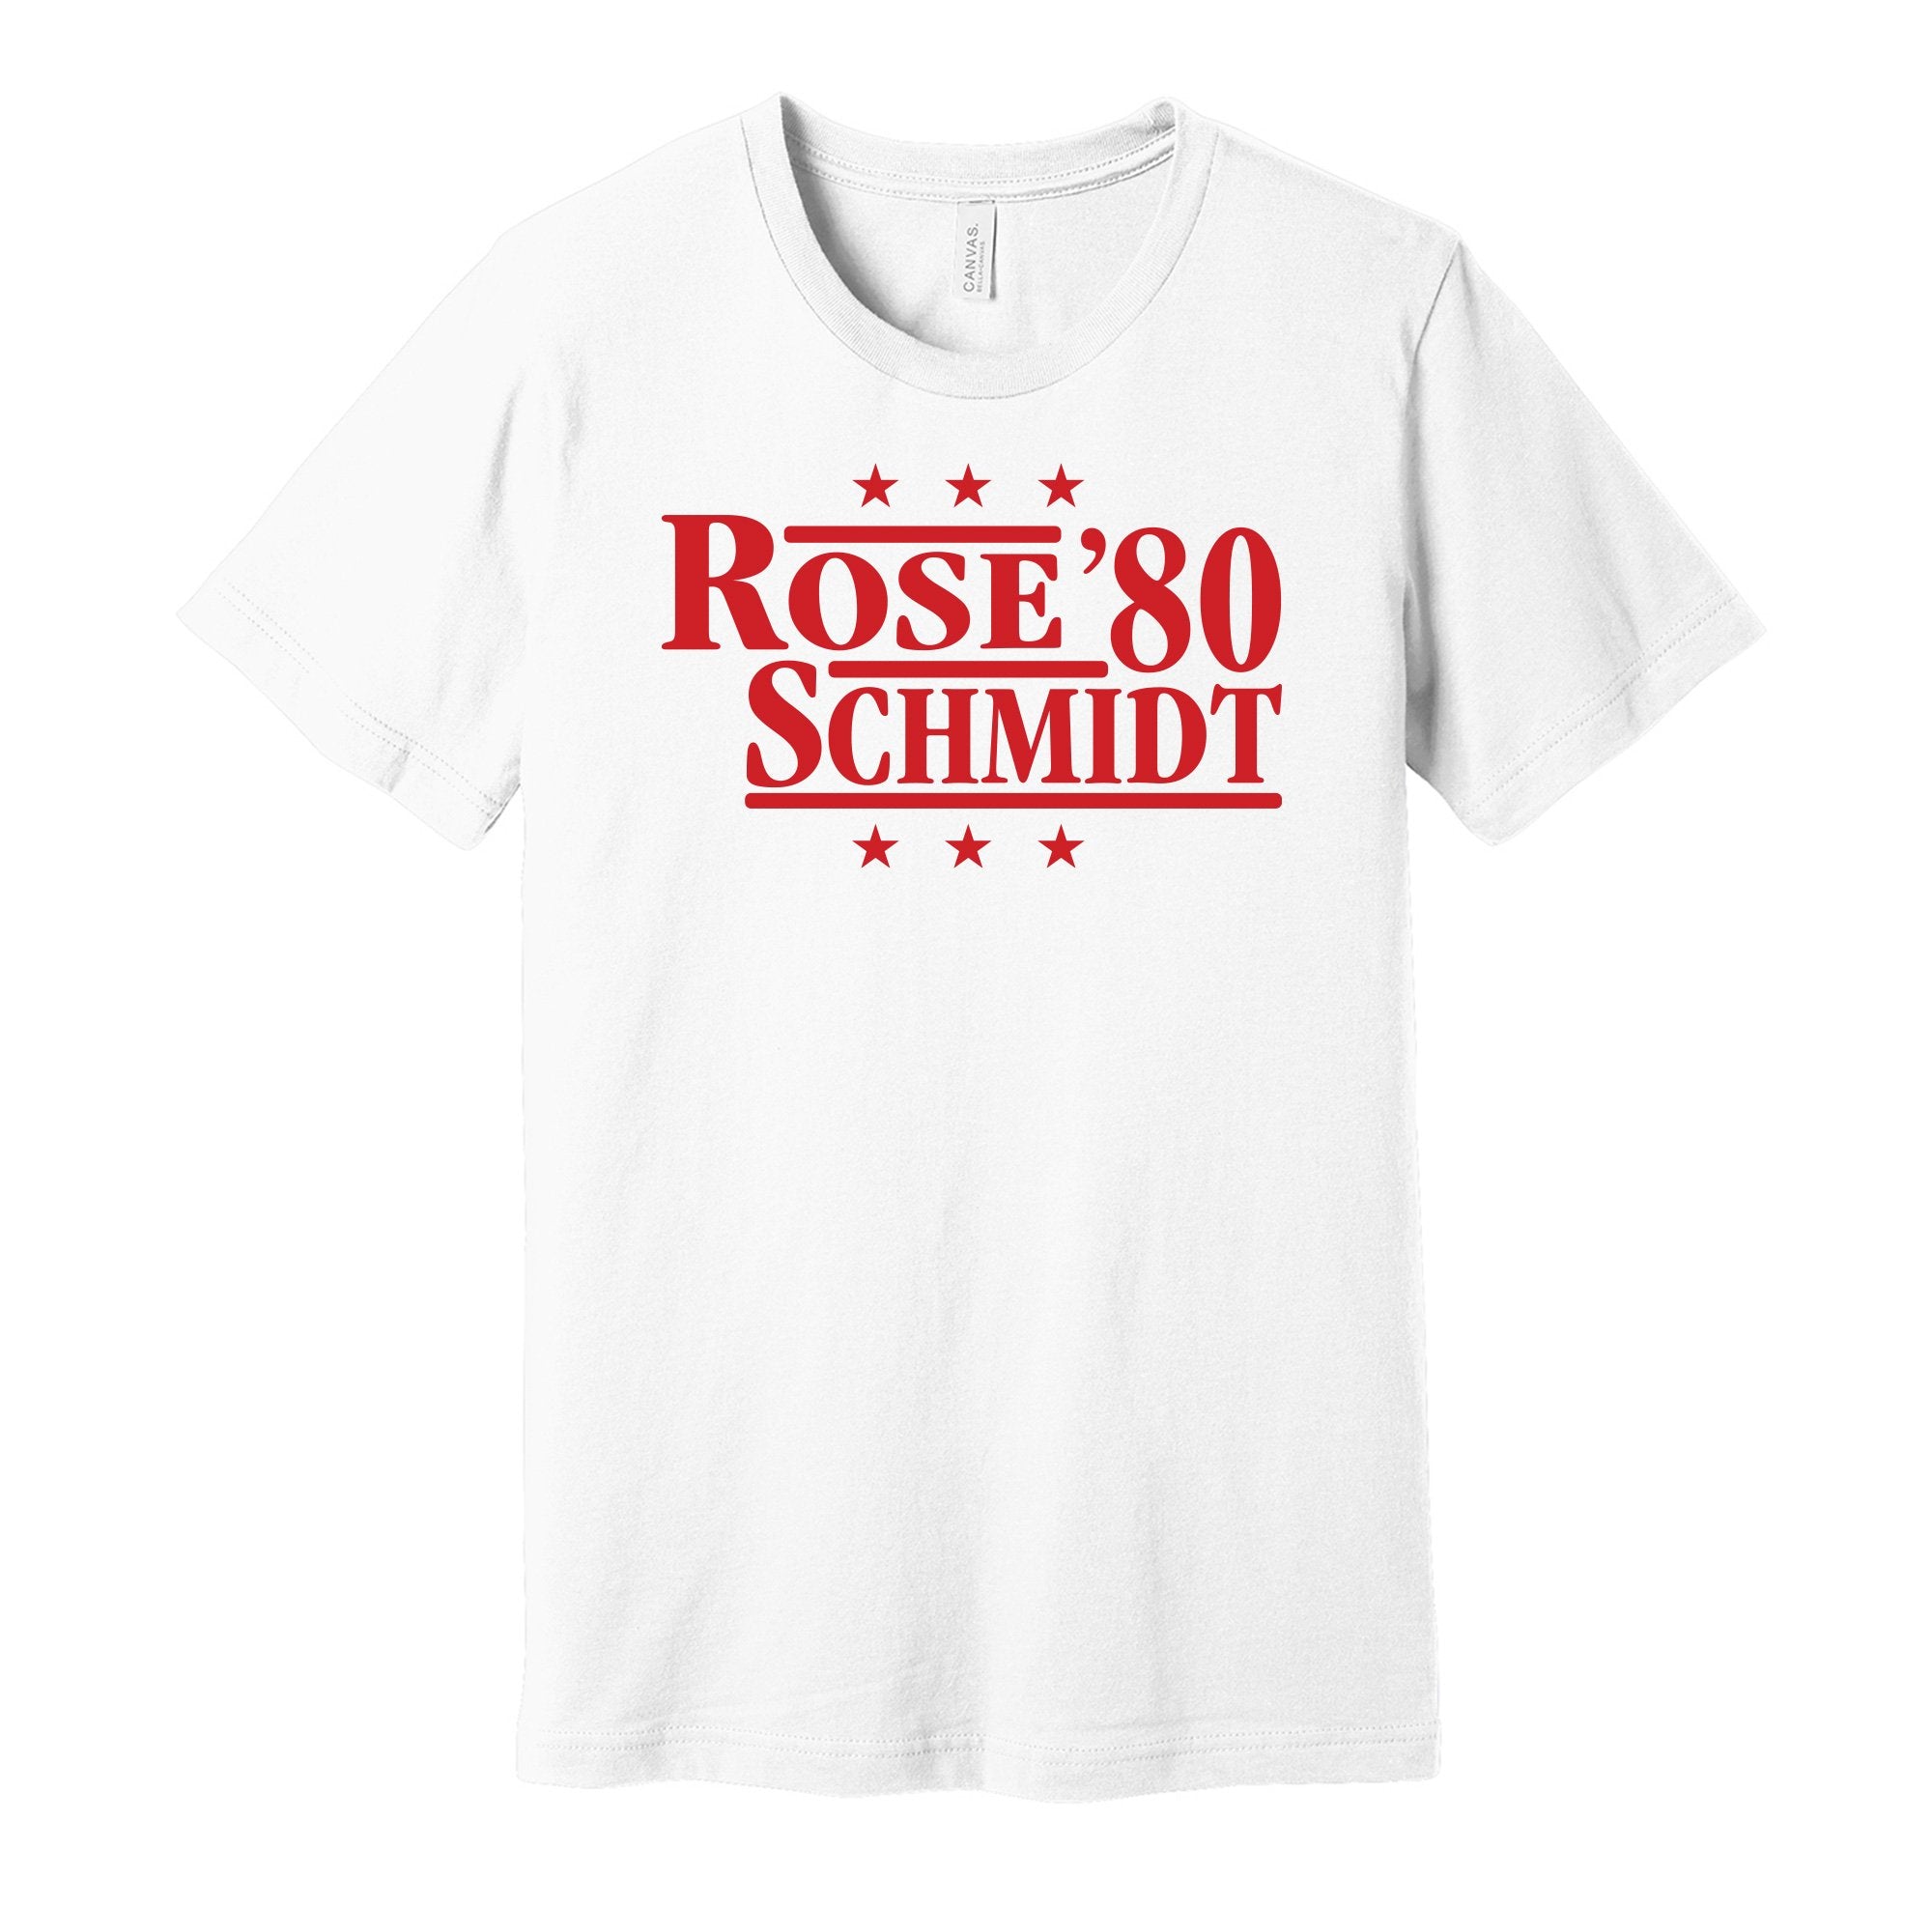 Philadelphia Phillies Vintage Signed Pete Rose T-Shirt